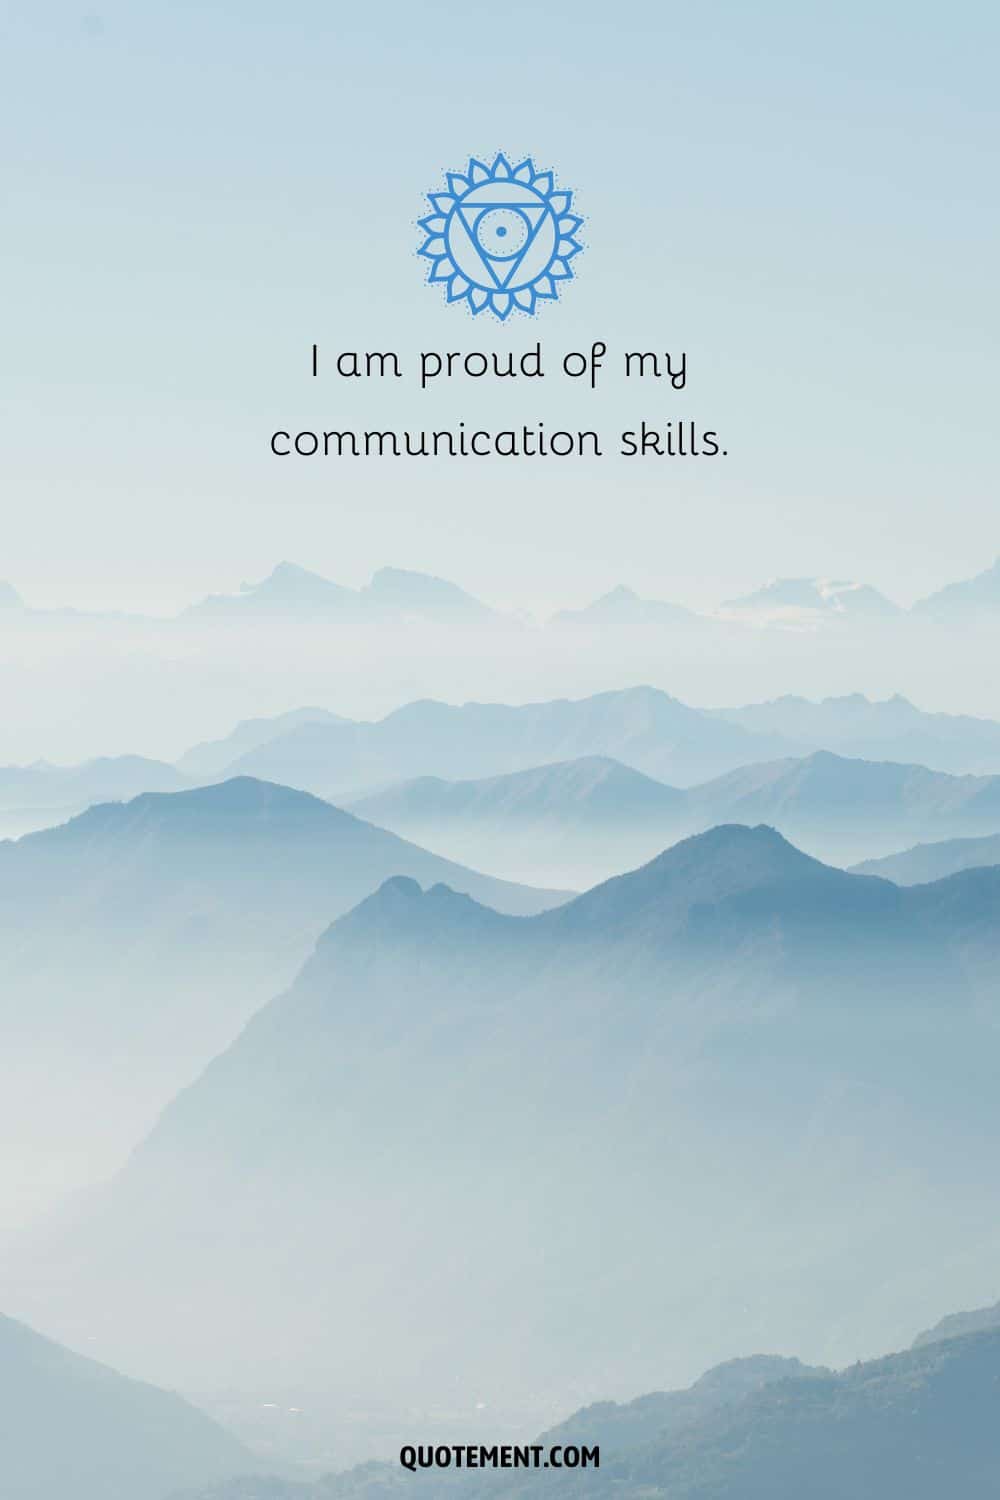 “I am proud of my communication skills.”